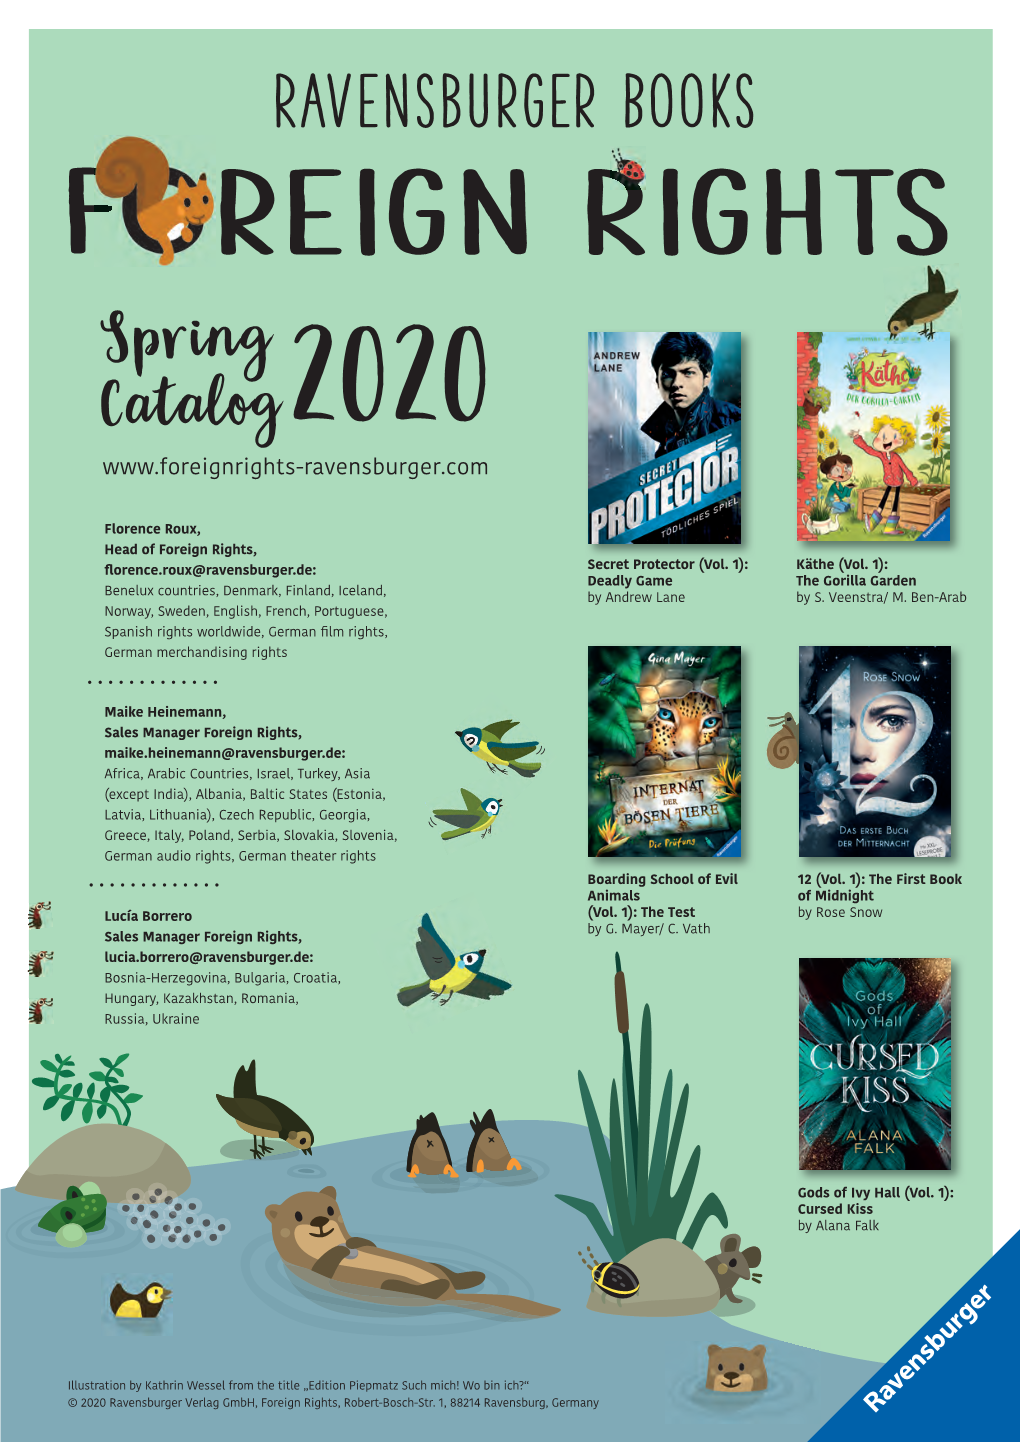 Ravensburger Books Reign Rights 2020